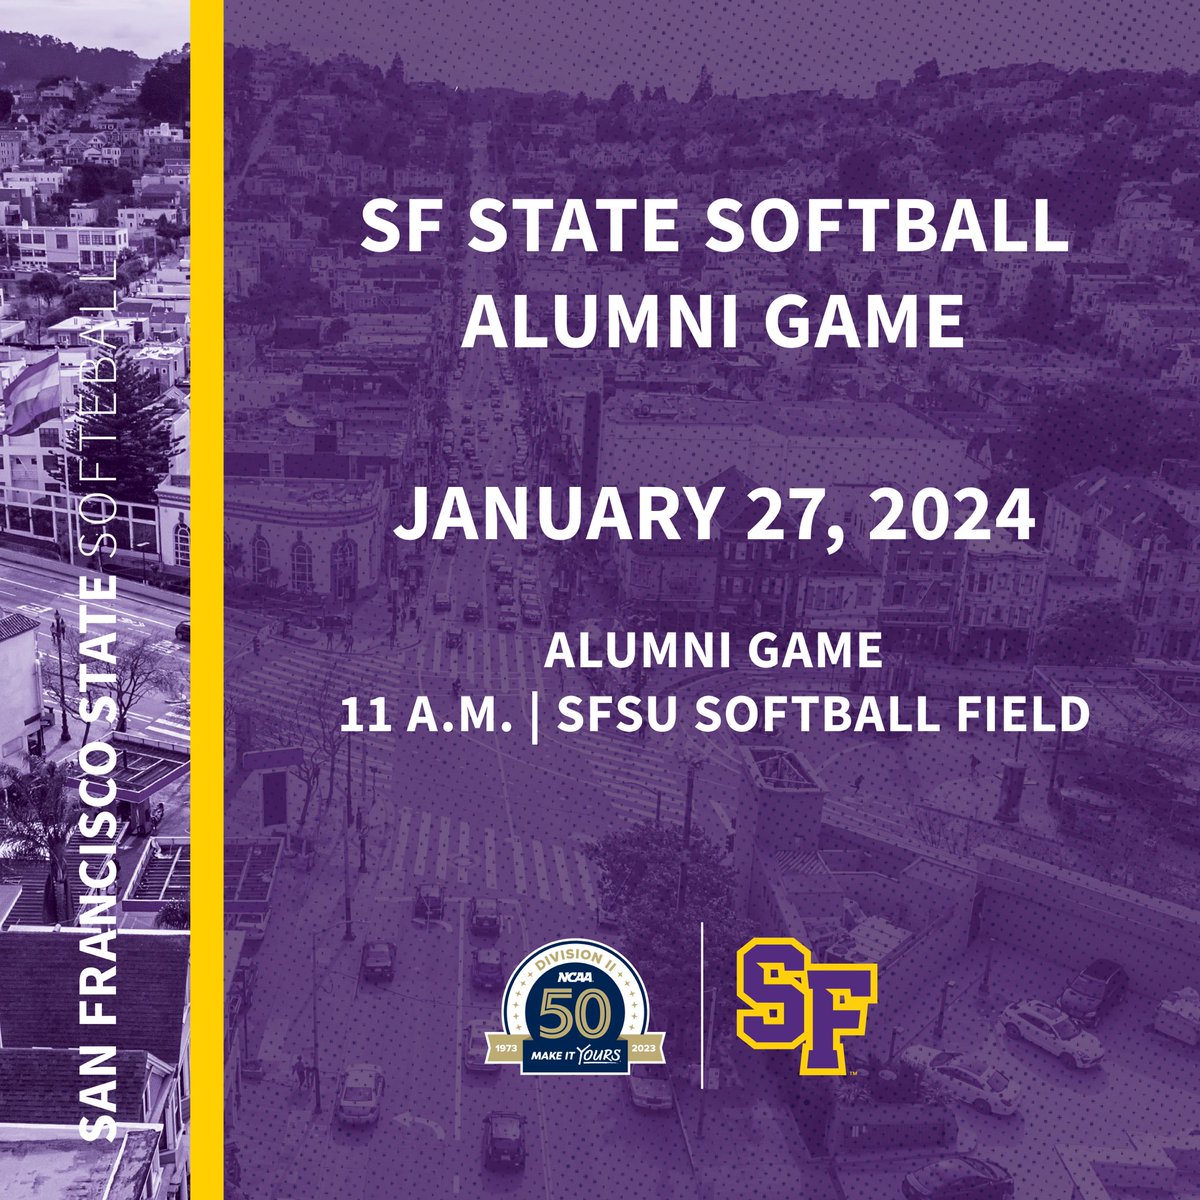 Calling all alumni, our annual Softball Alumni Game is January 27!